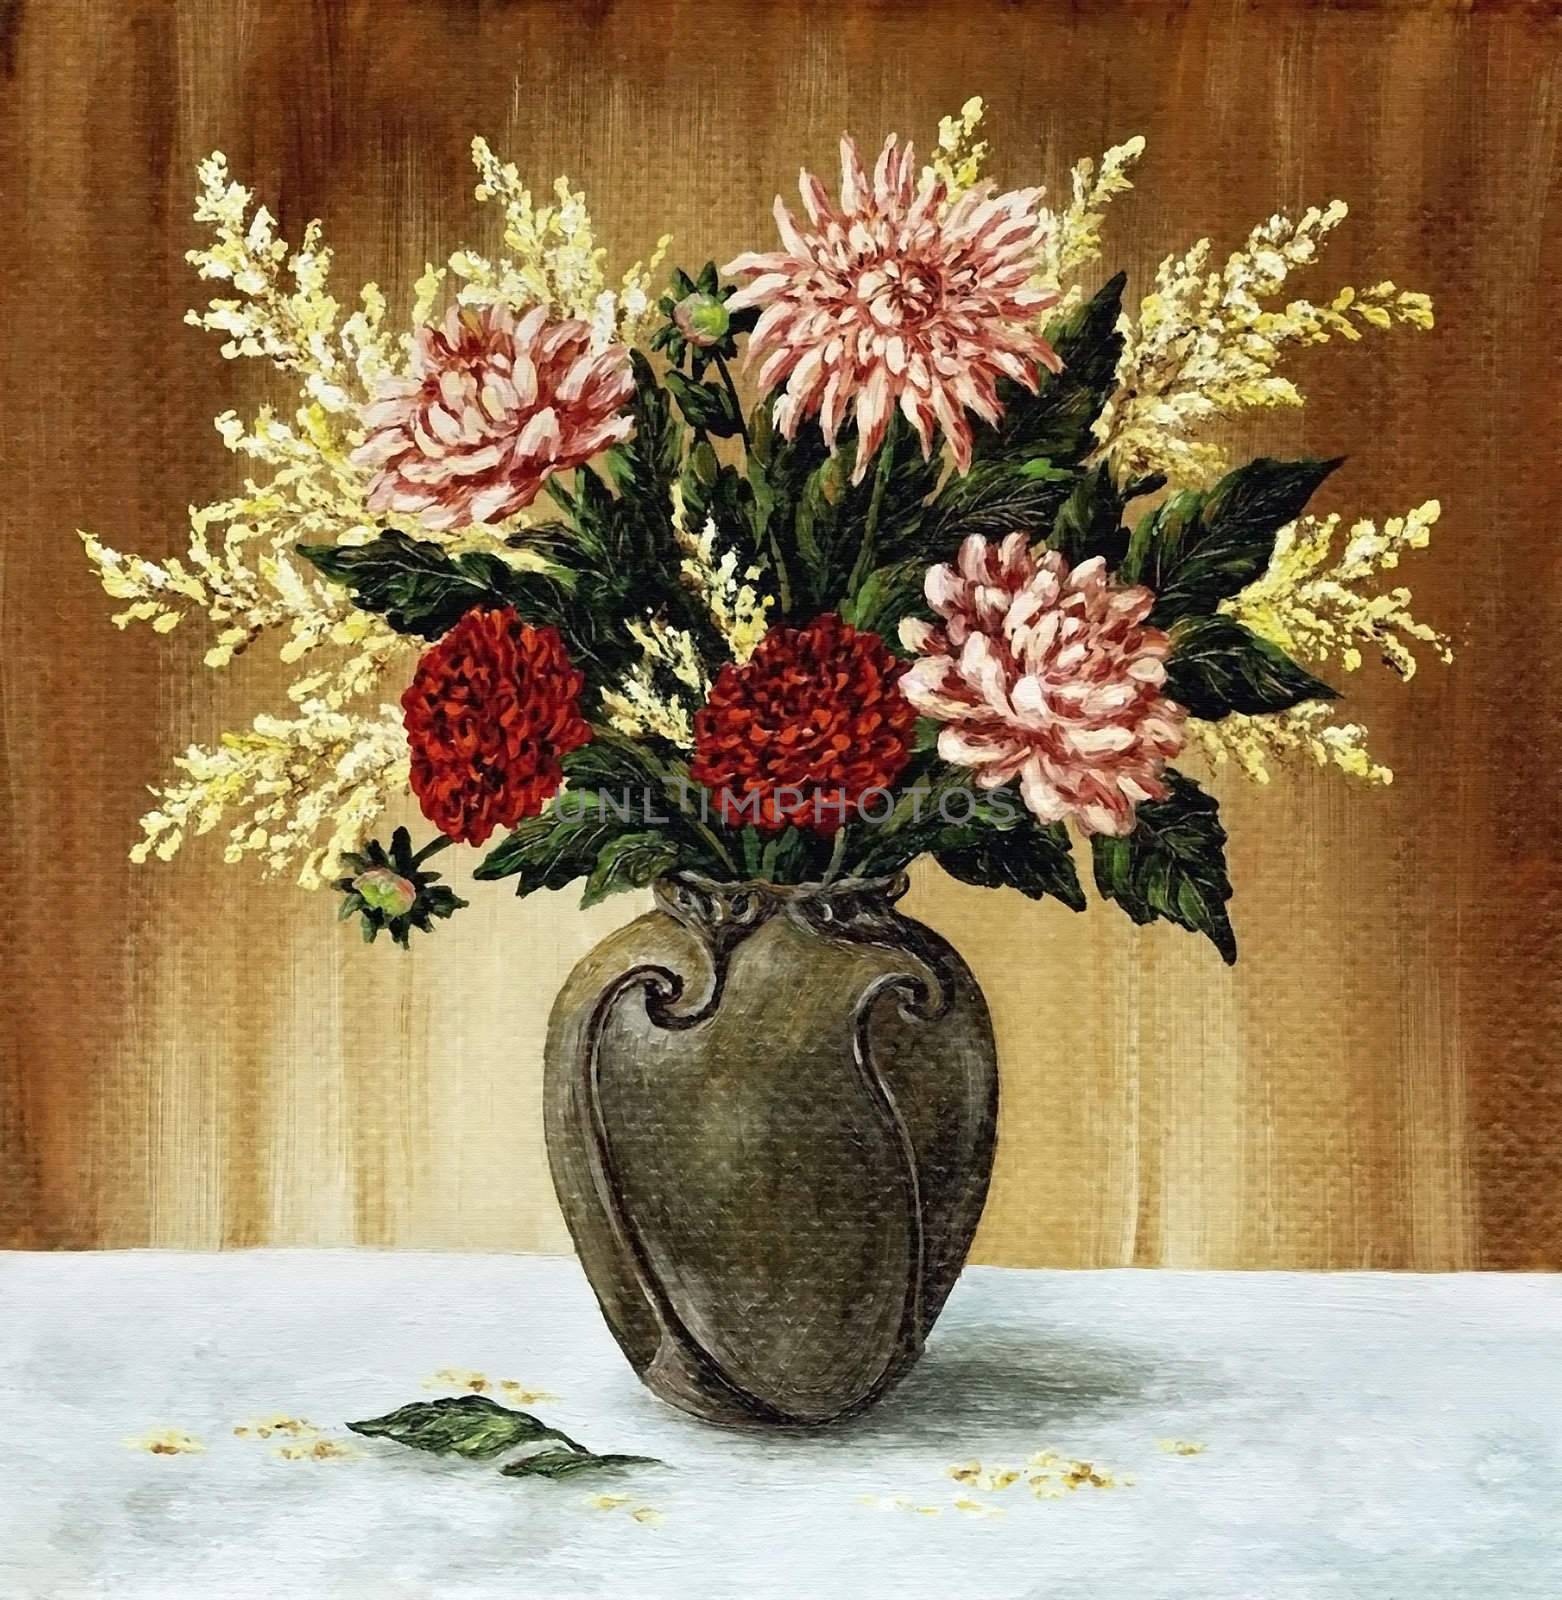 Picture oil paints on a canvas: a bouquet of dahlias in a ceramic vase